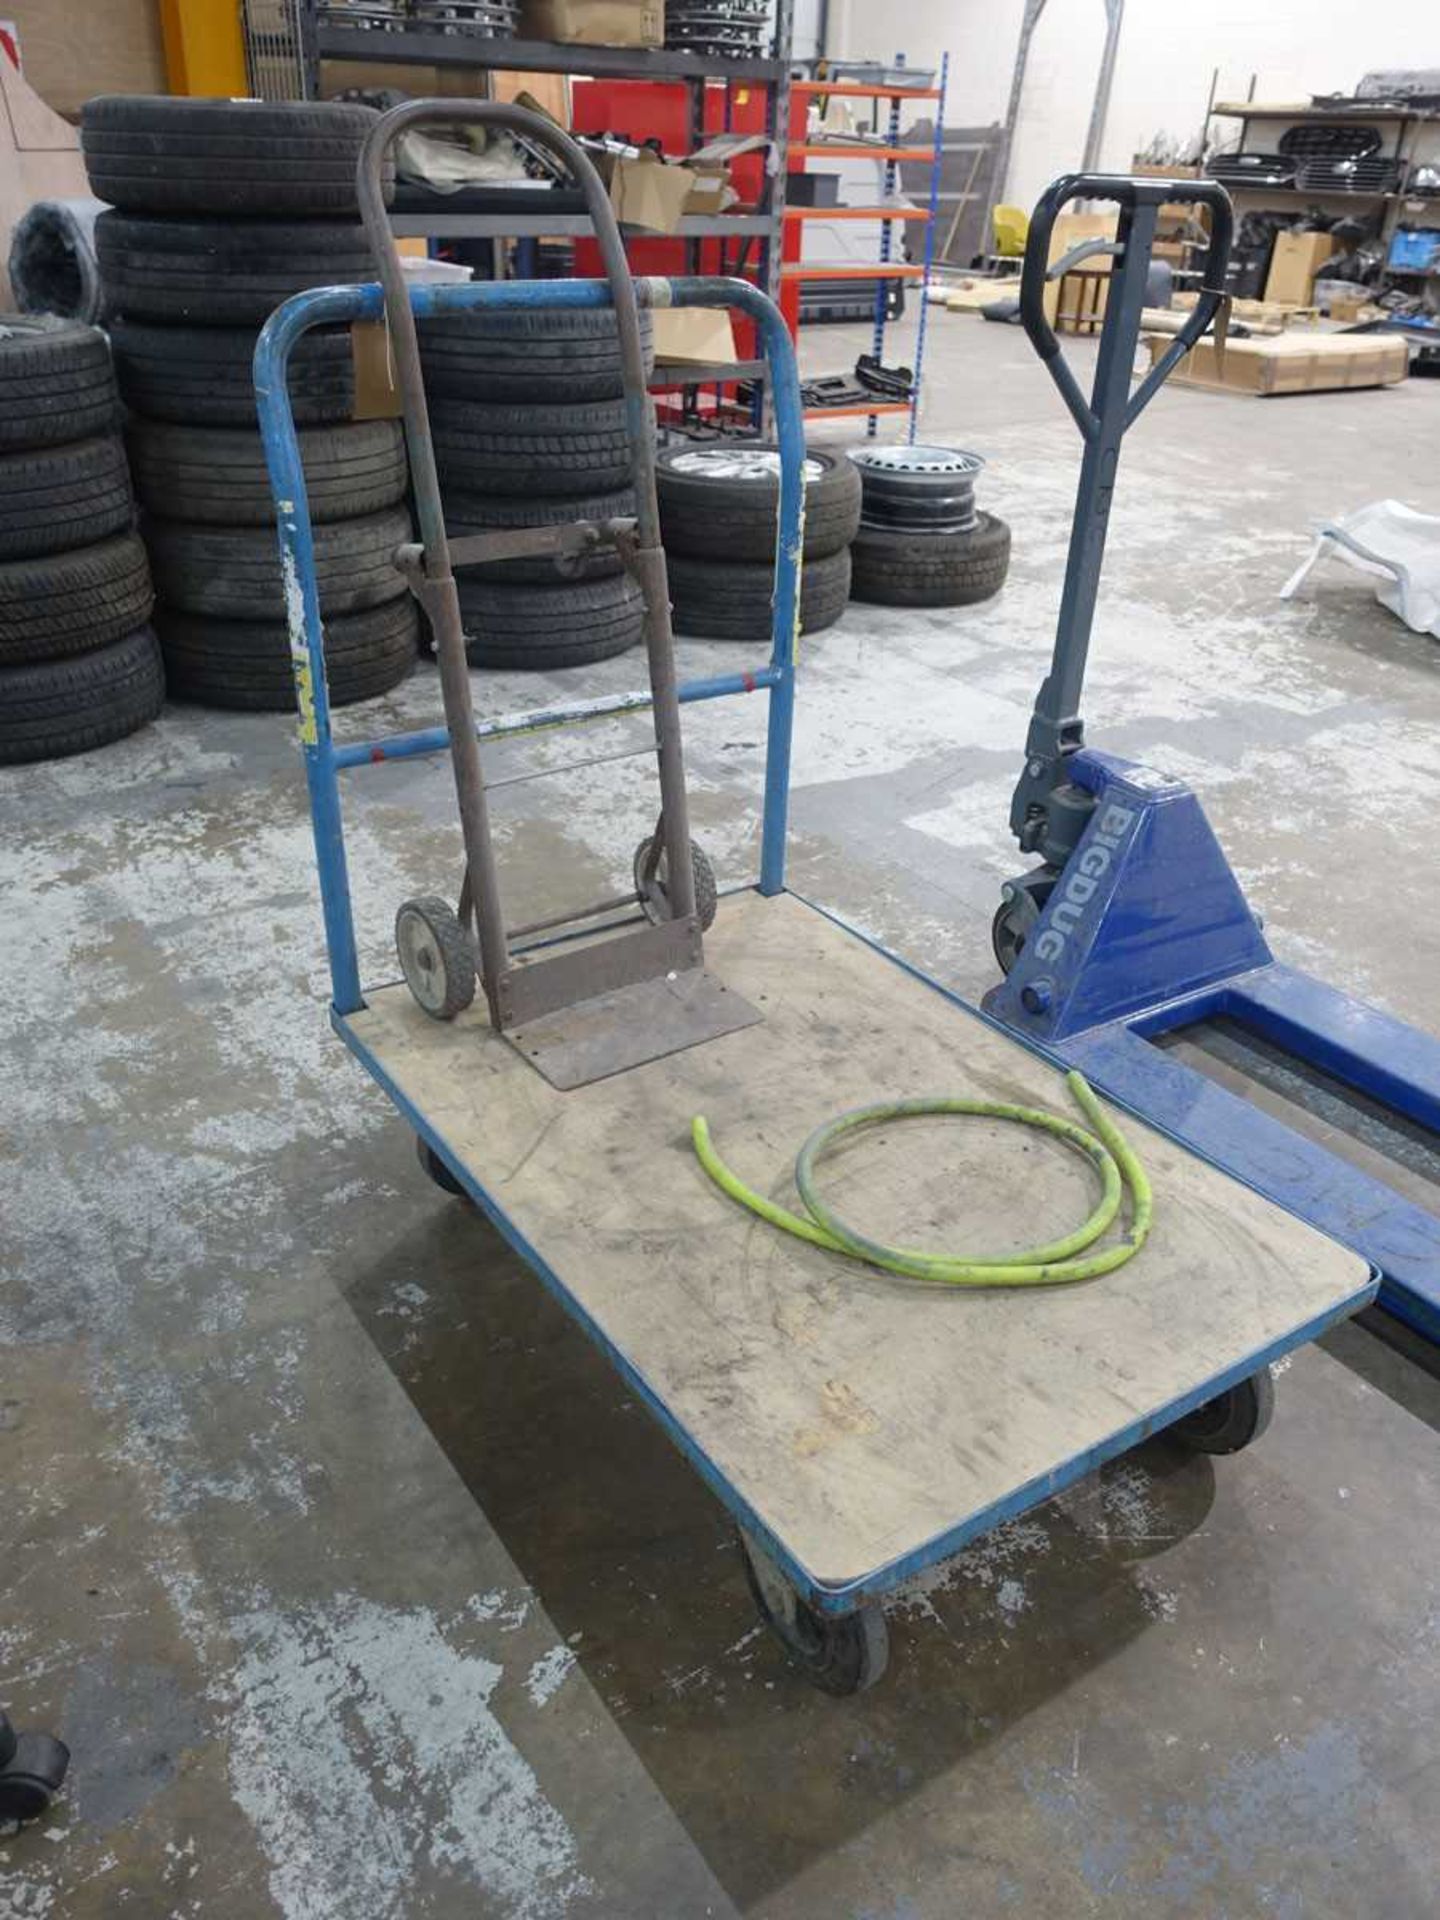 +VAT 4-wheel platform trolley and sack barrow